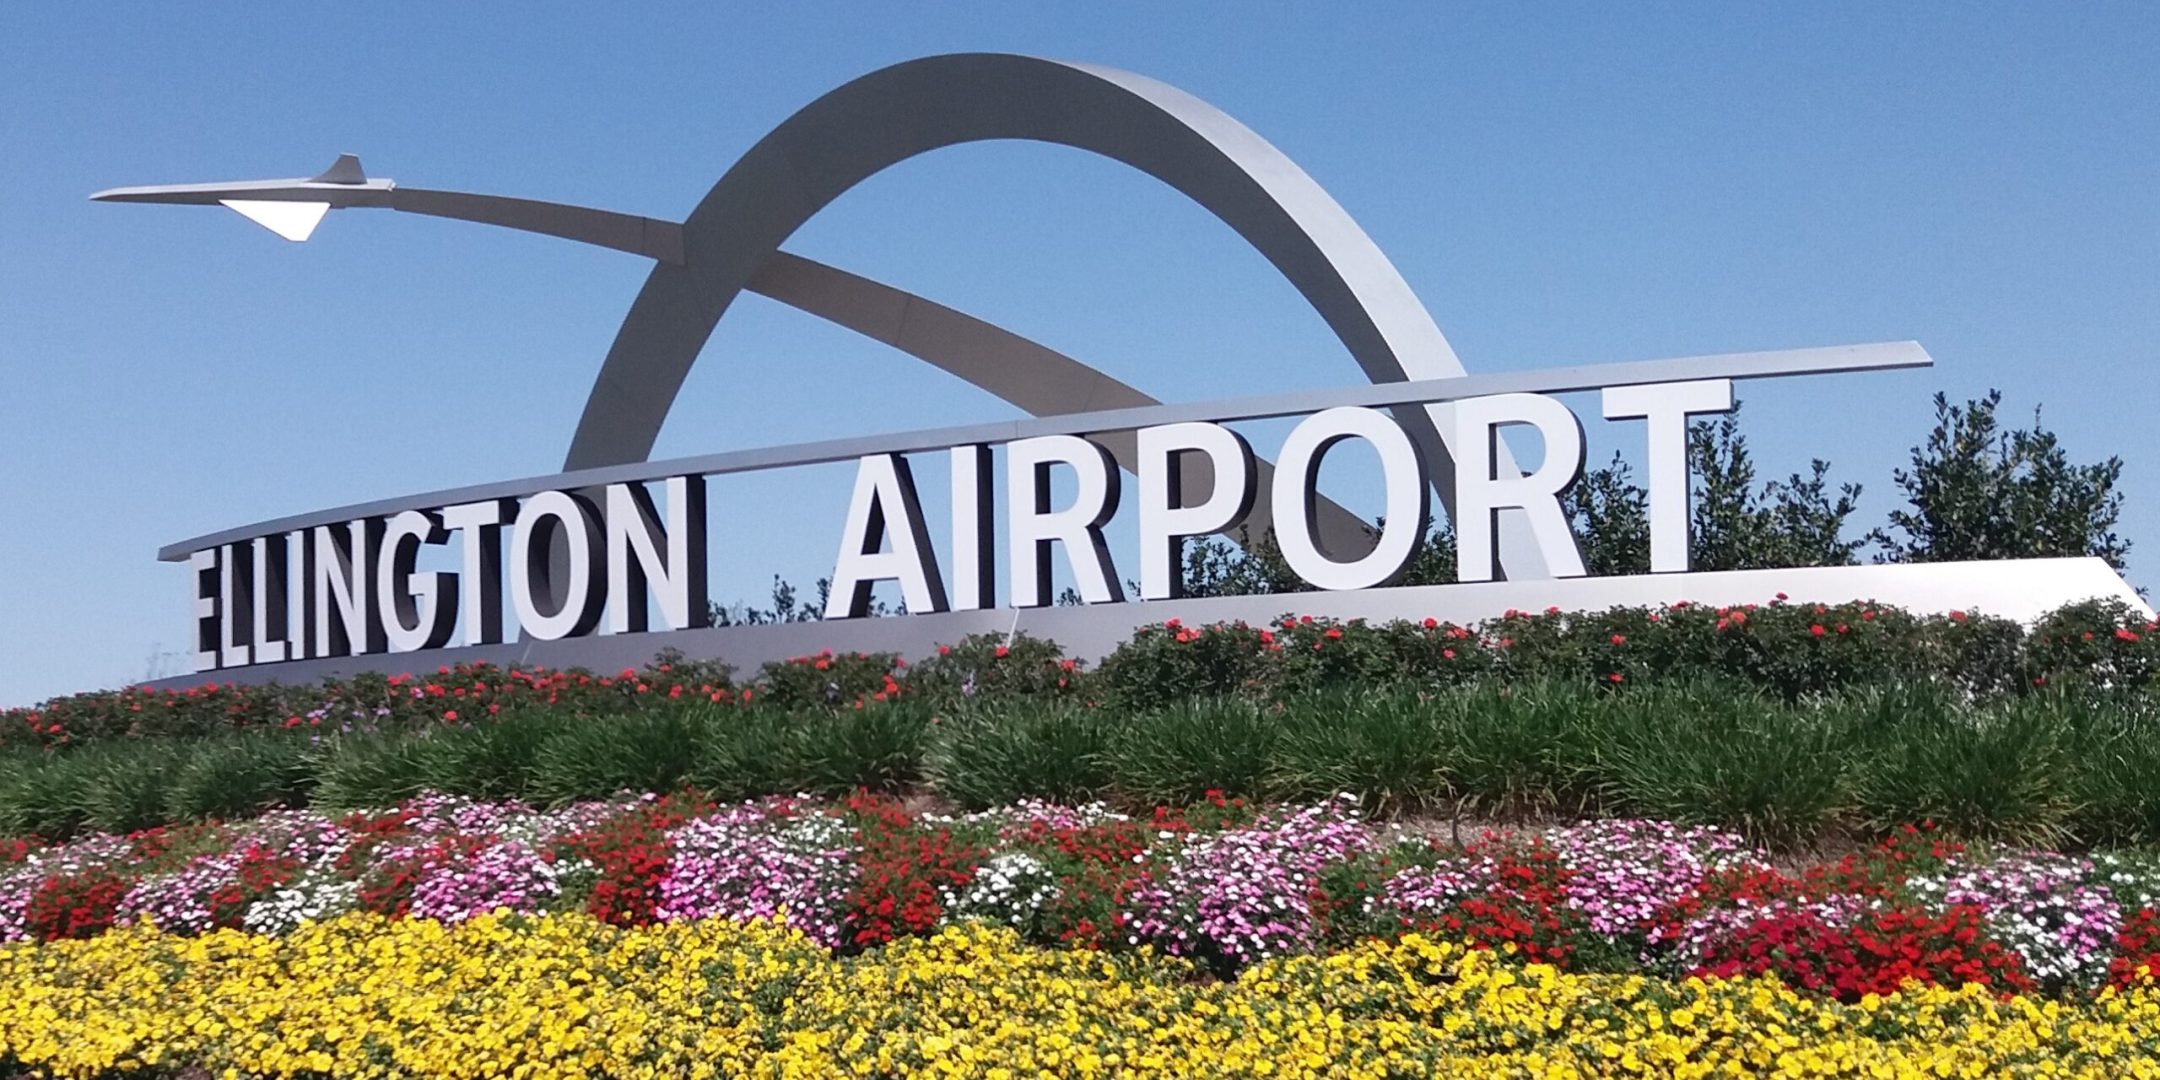 Ellington_Airport